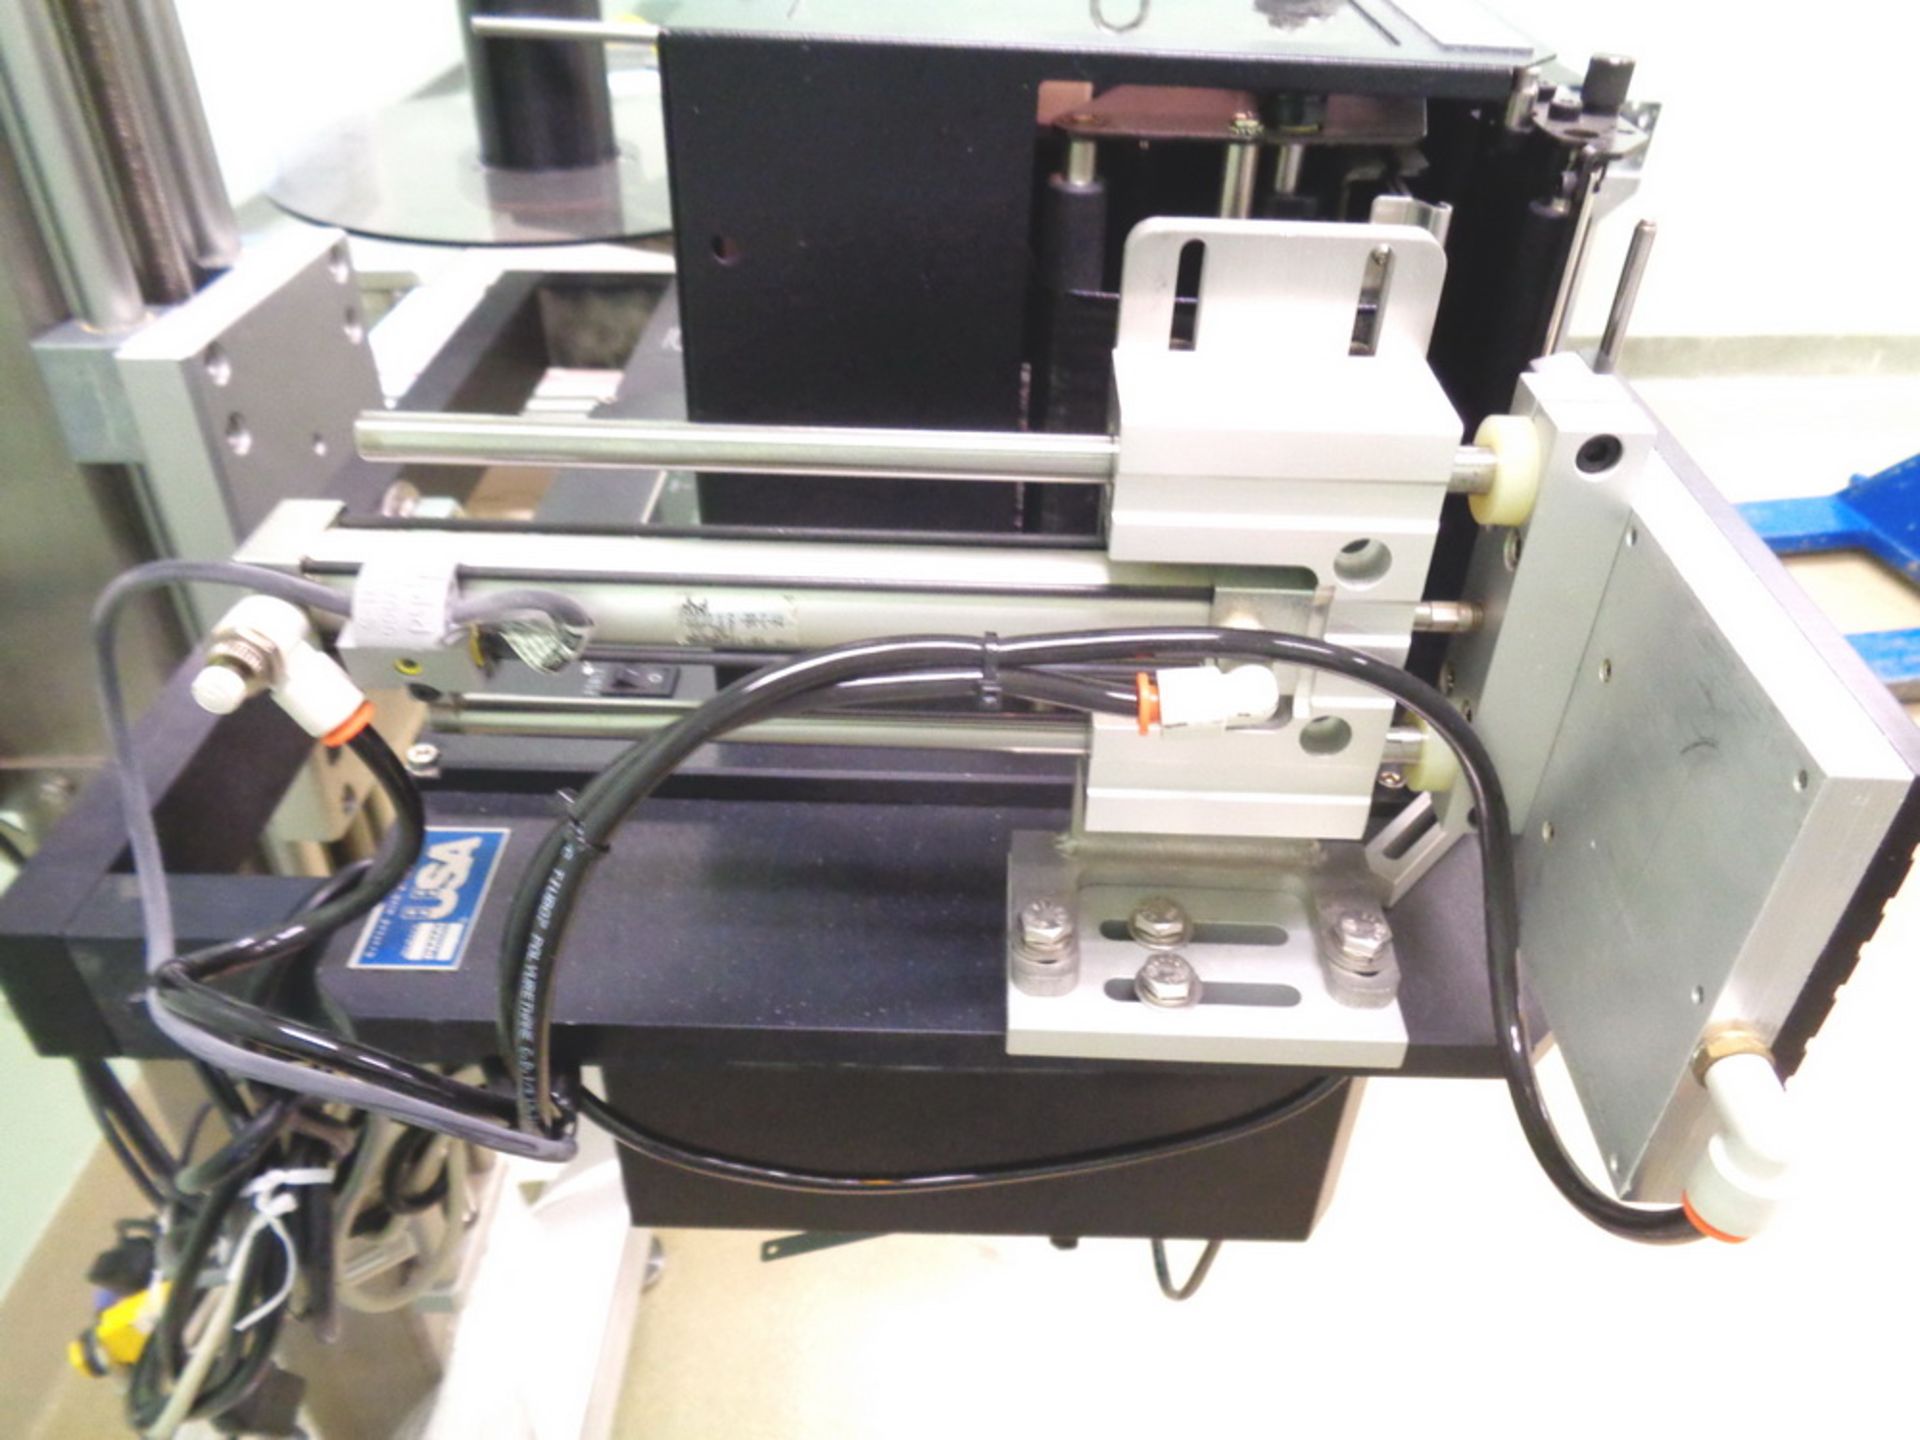 Quadrel Print and Apply Pressure Sensitive Carton Labeler, Model Q31-LS8490, S/N 57957-01 - Image 5 of 11